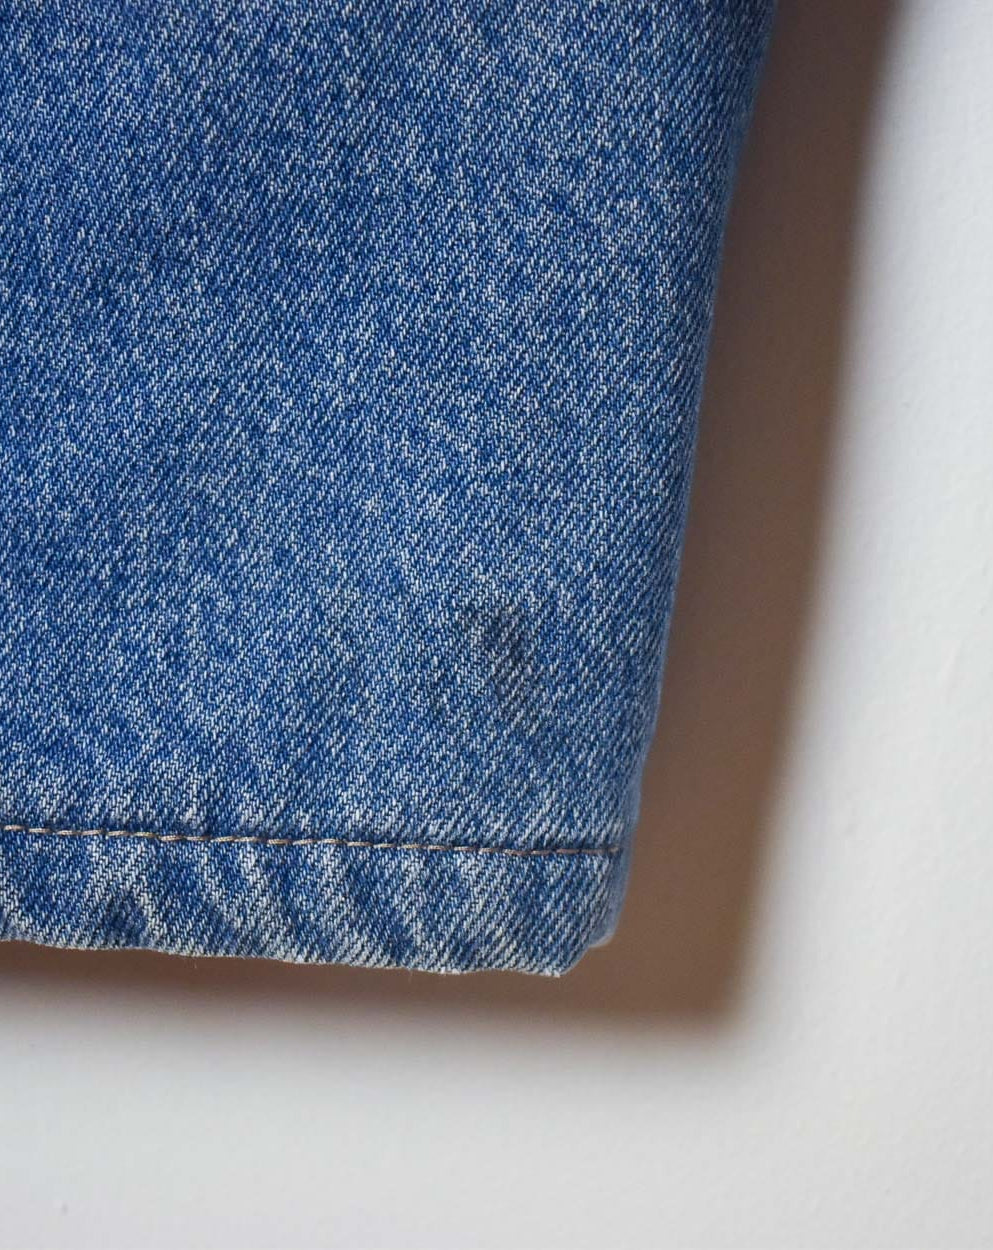 Blue Carhartt Flannel Lined Carpenter Jeans - W40 L28